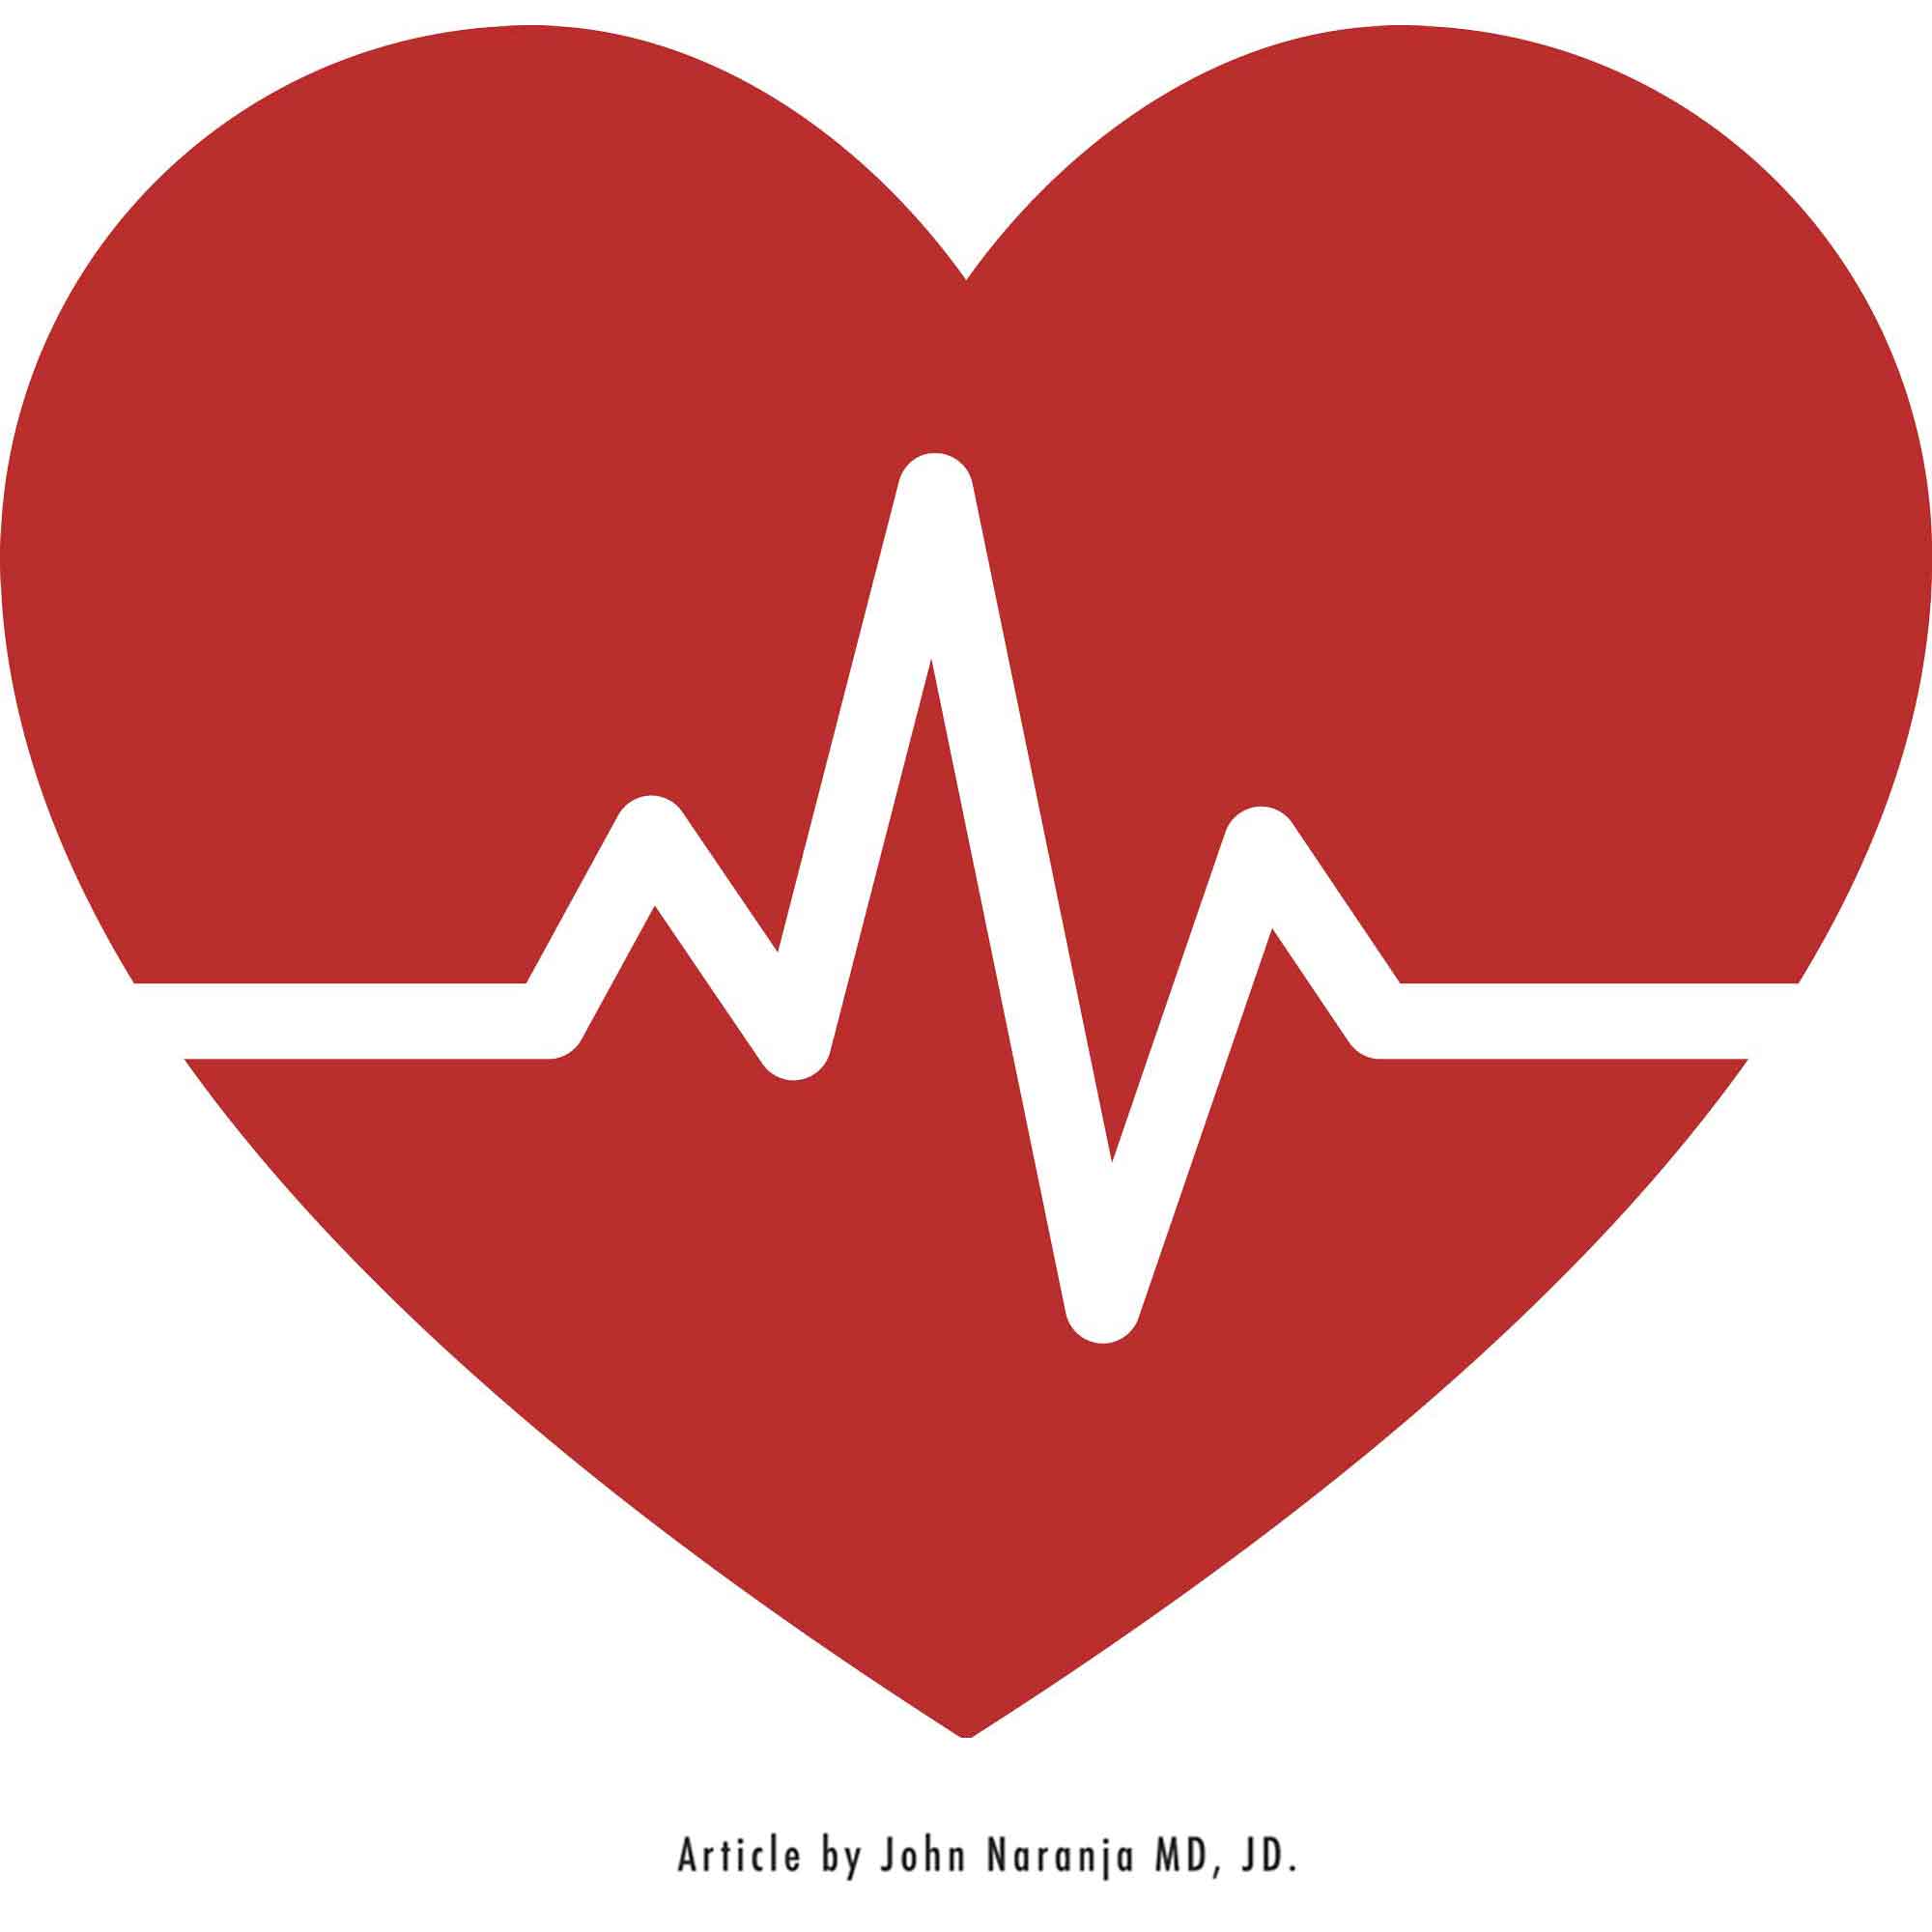 heartbeat - heart shaped icon article by Dr John Naranja MD, JD